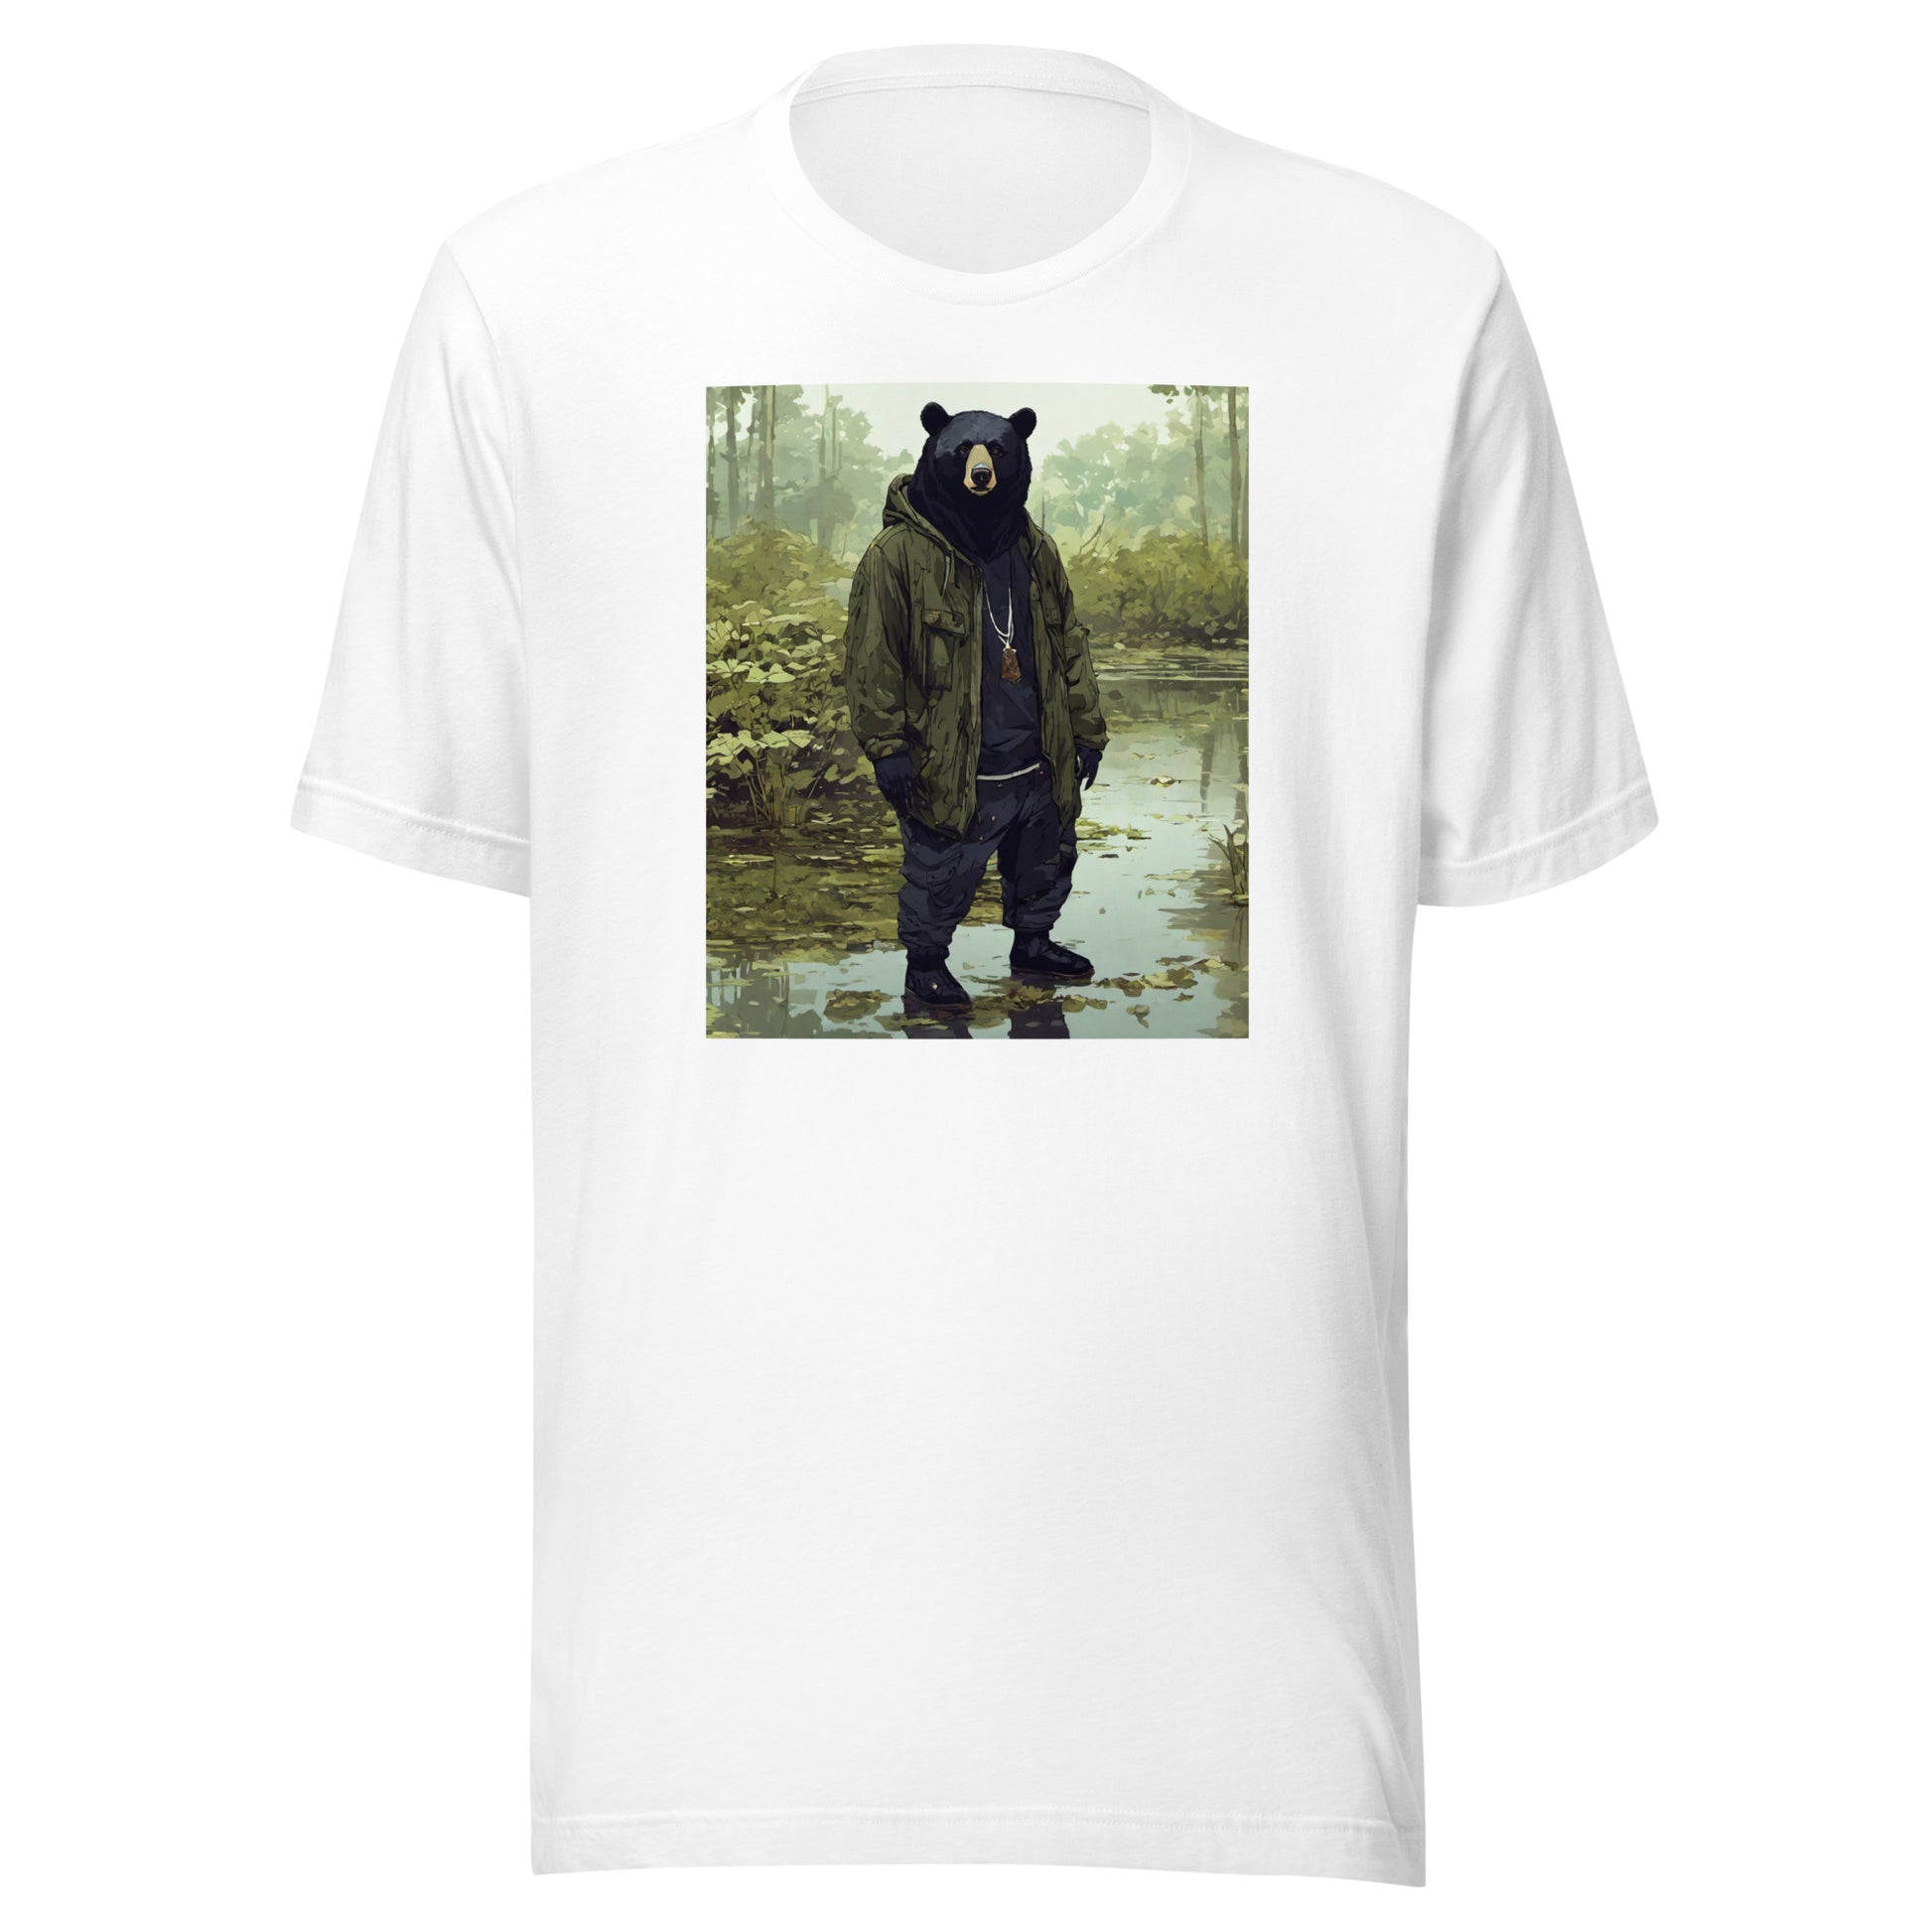 Stoic Black Bear Men's Graphic T-Shirt White